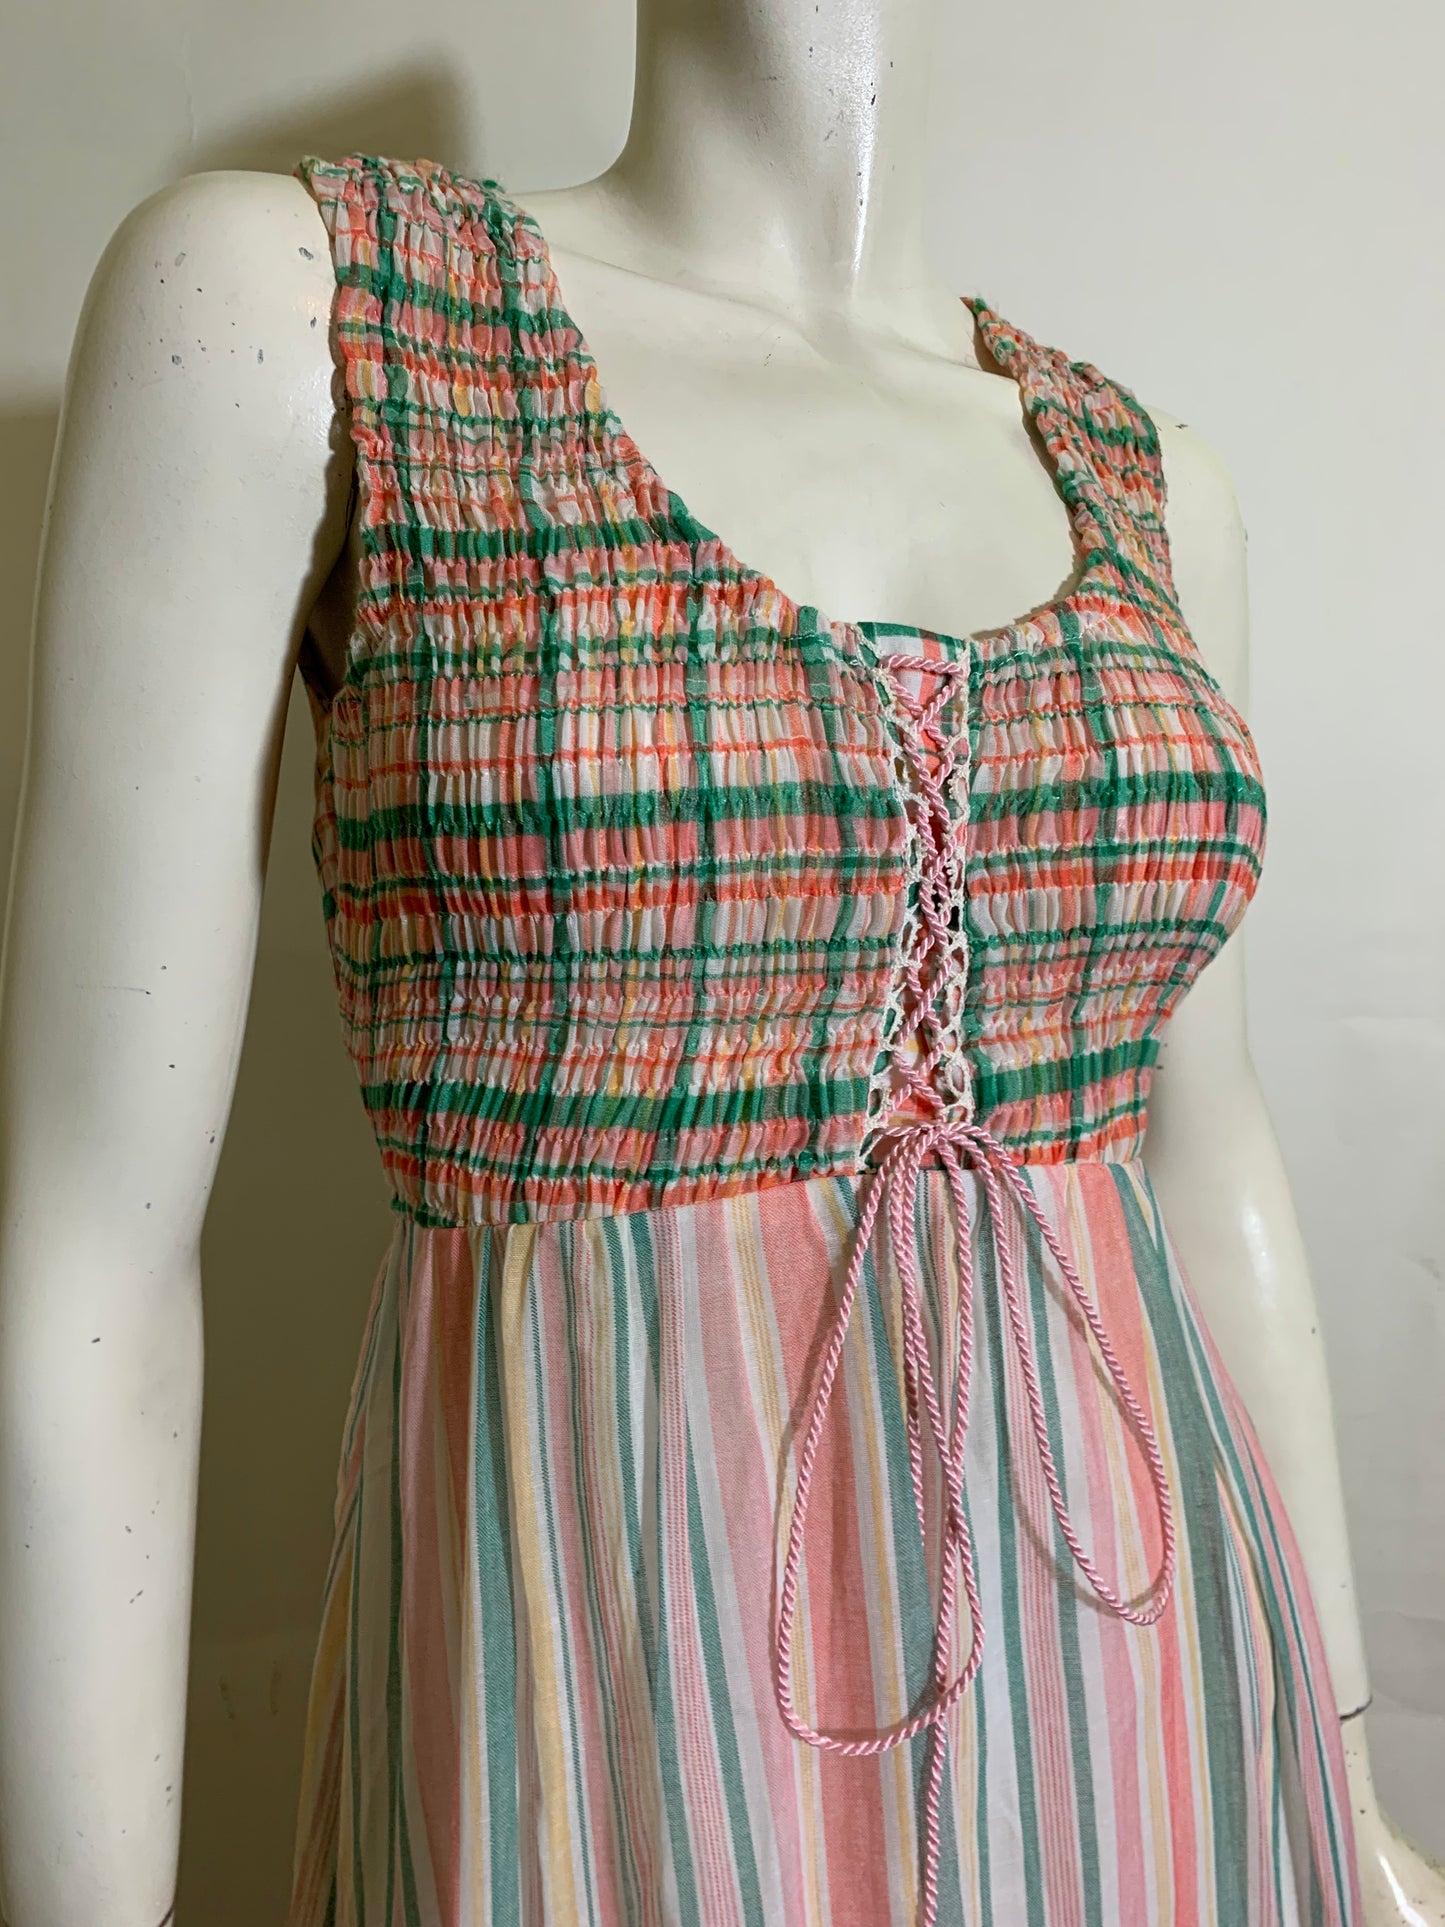 Peachy Perfect Striped Cotton Ruffled Maxi Dress with Shawl circa 1970s